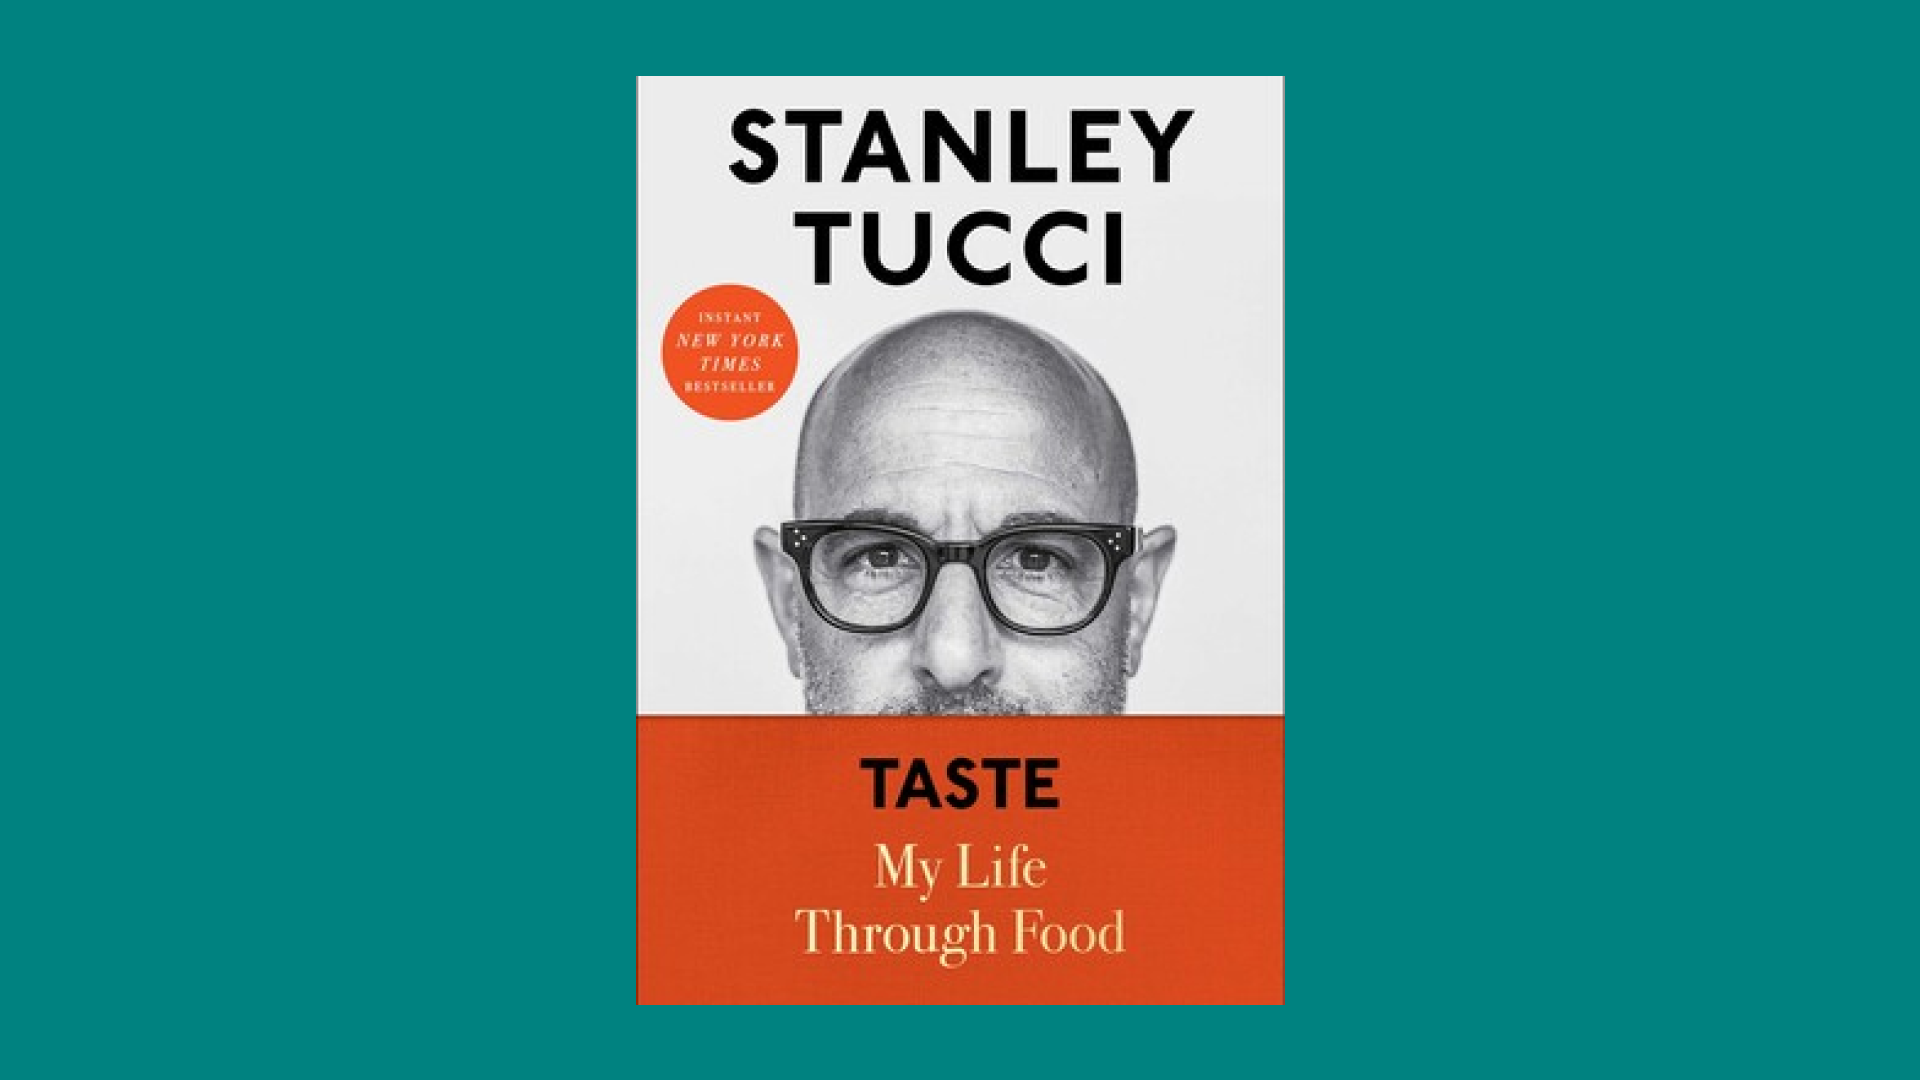 “Taste” by Stanley Tucci